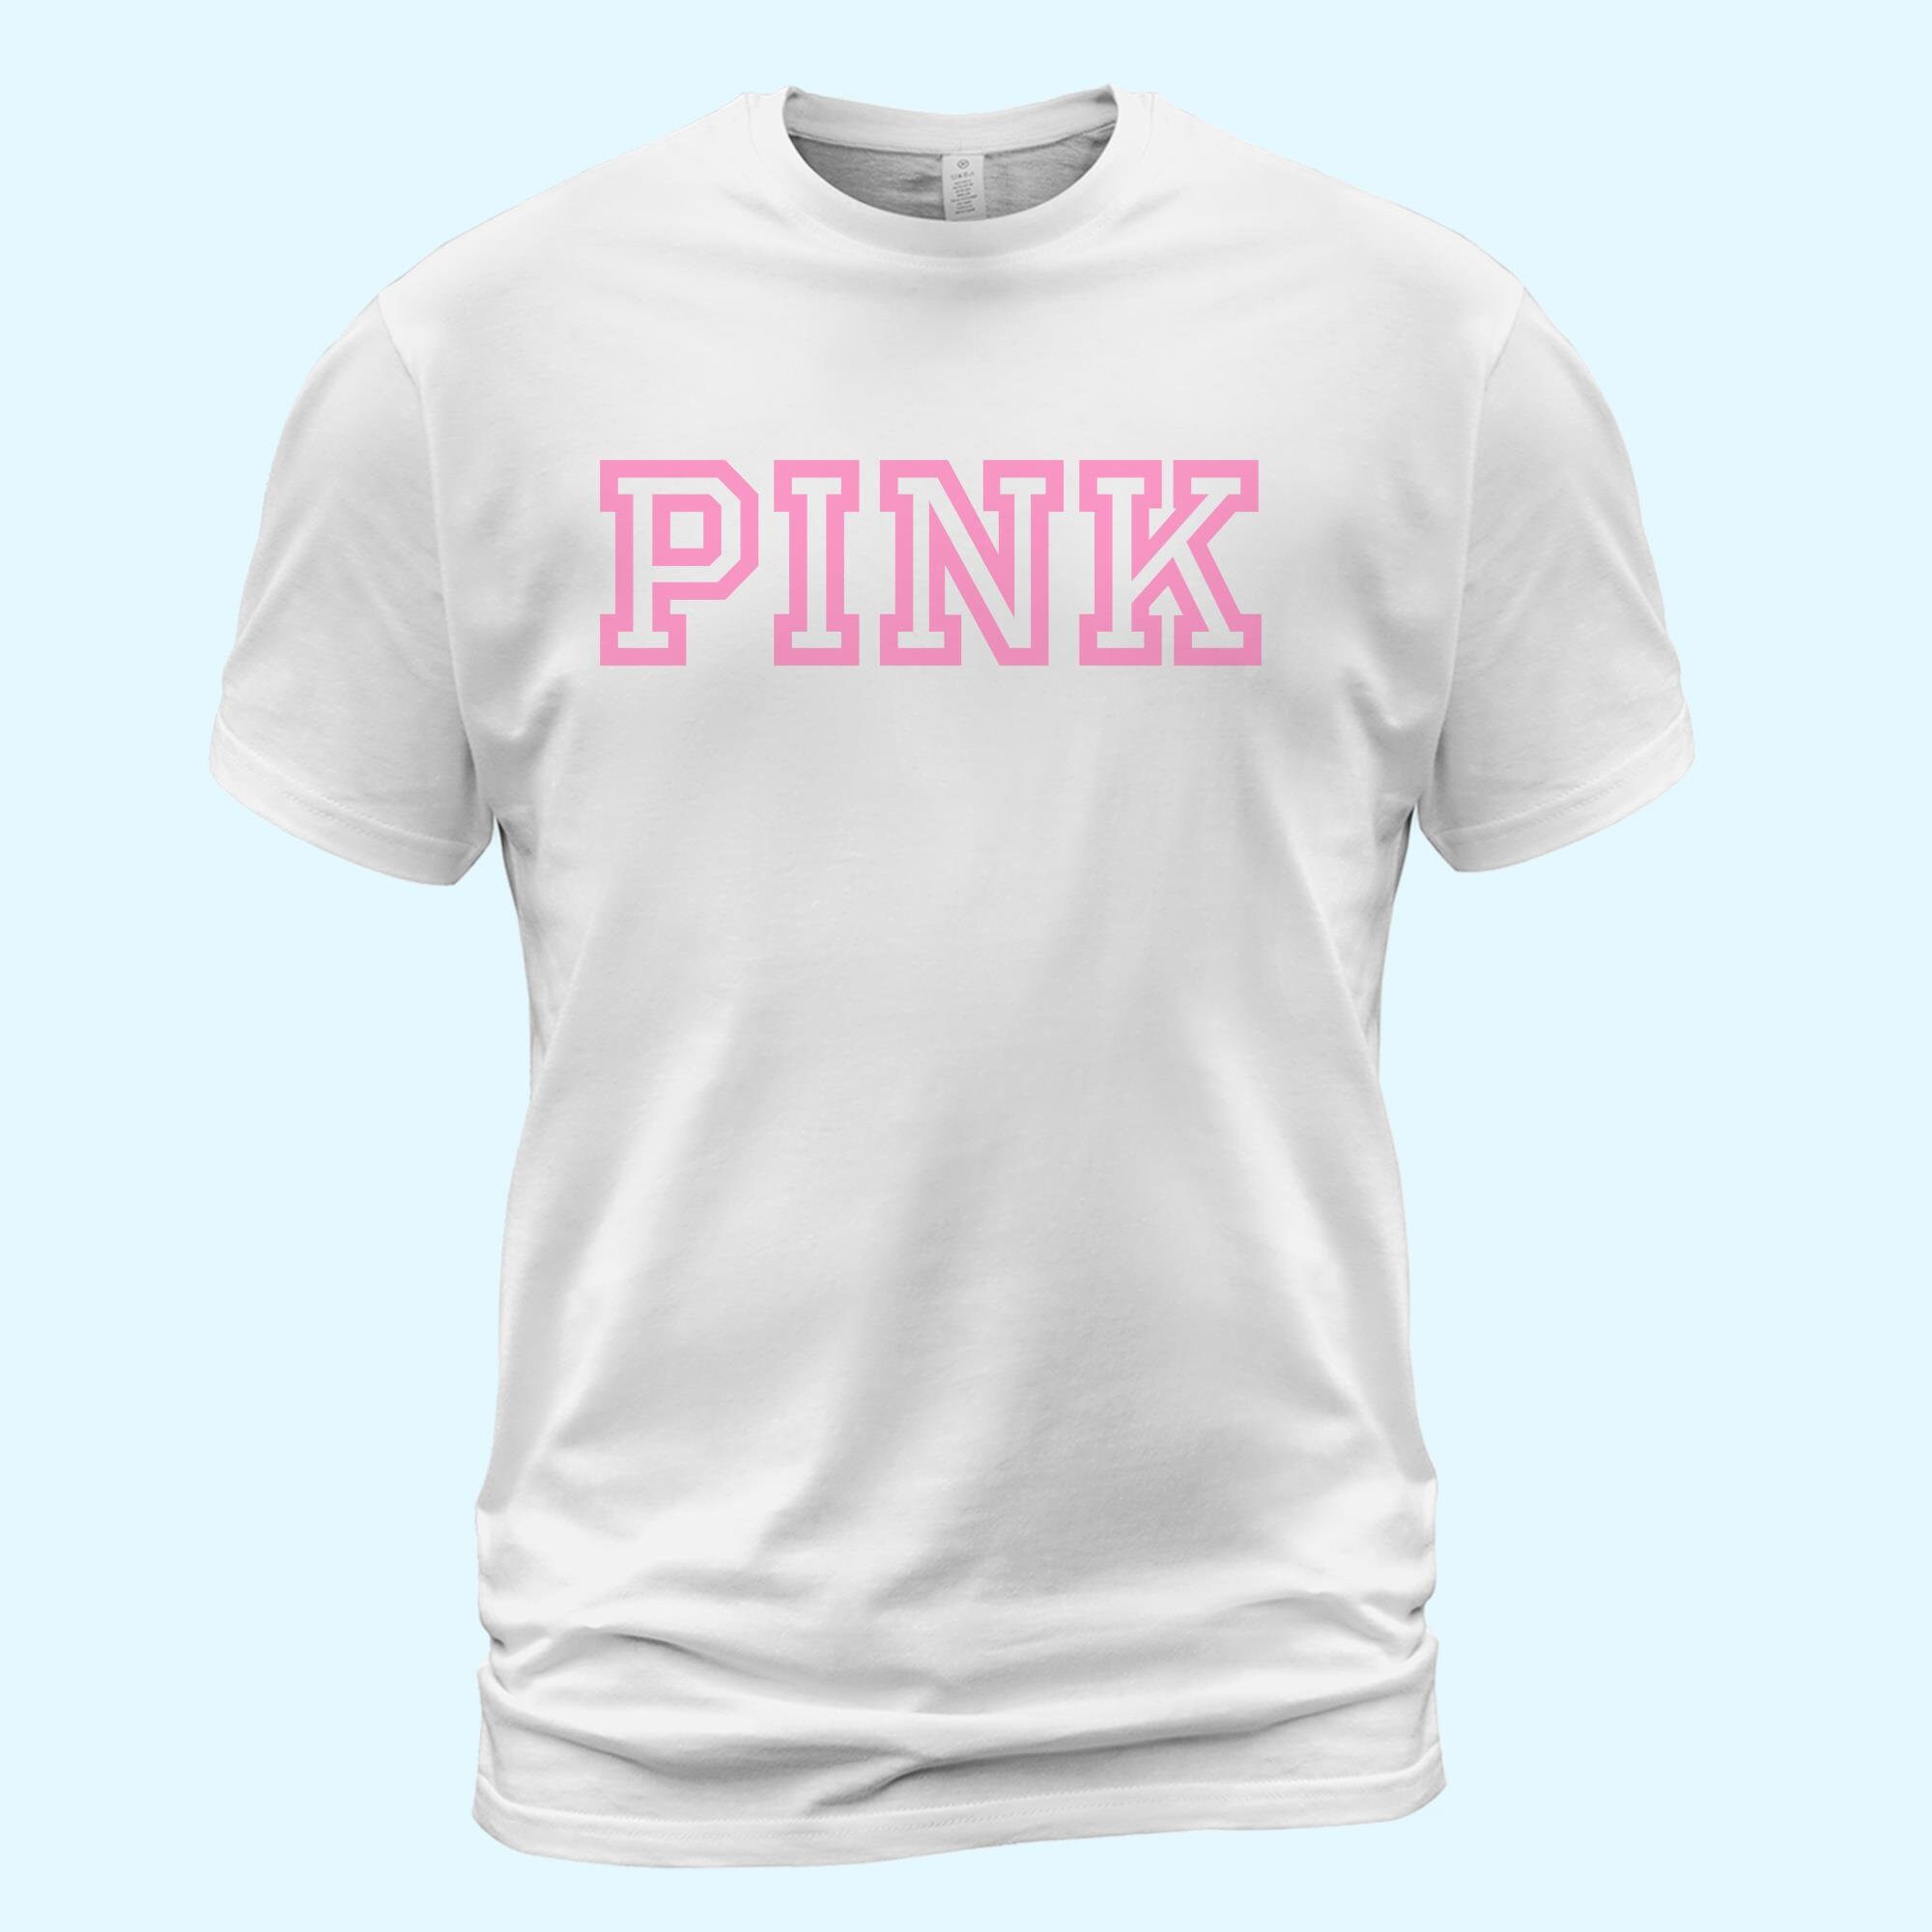 Mode Shirts T-shirts Victoria’s Secret Victoria\u2019s Secret T-shirt roze-room gestippeld casual uitstraling 